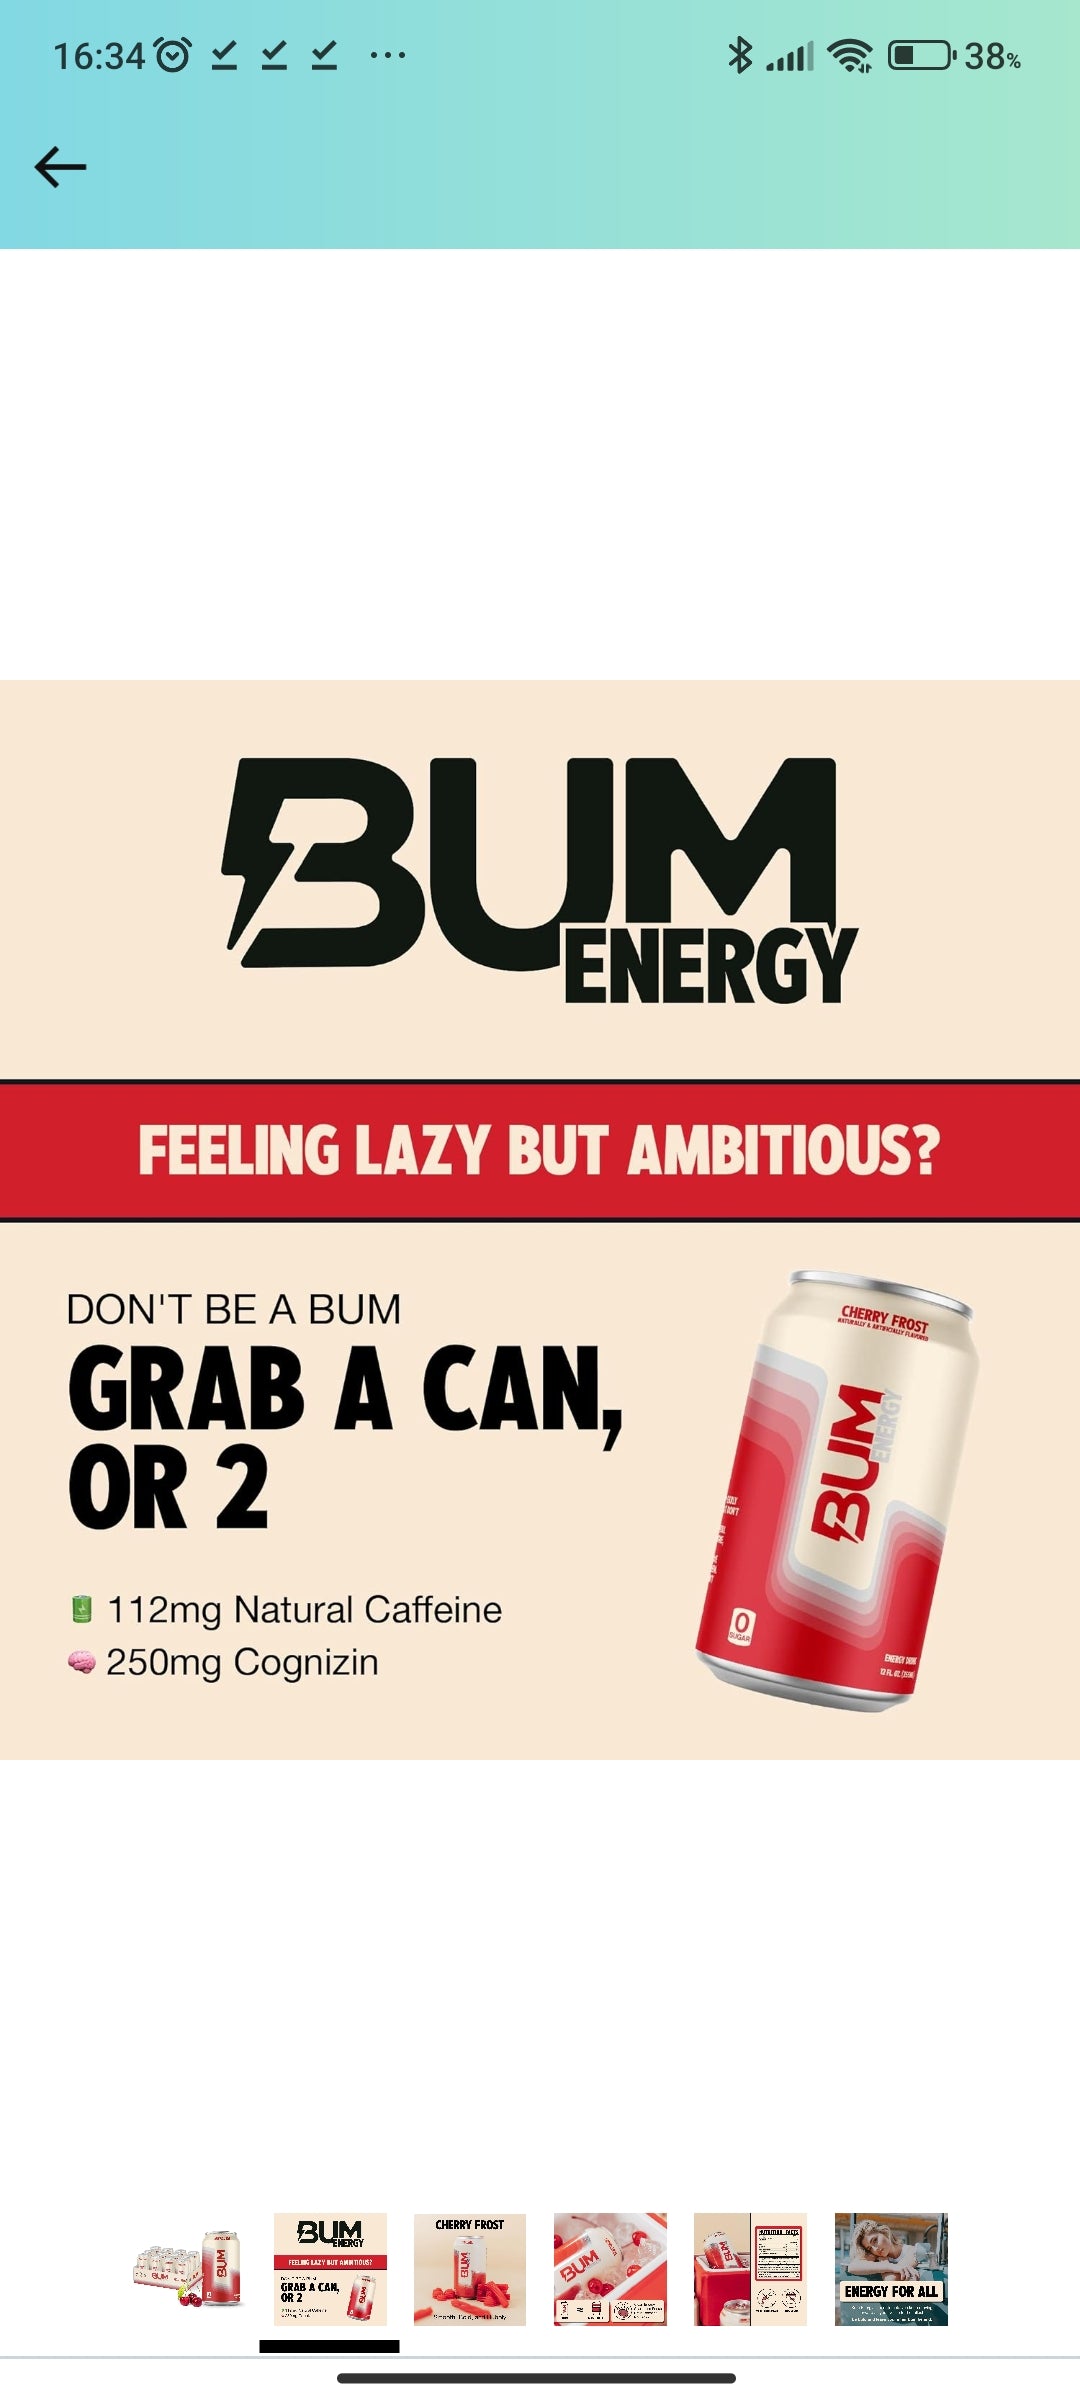 Bum energy Cbum 355ml can